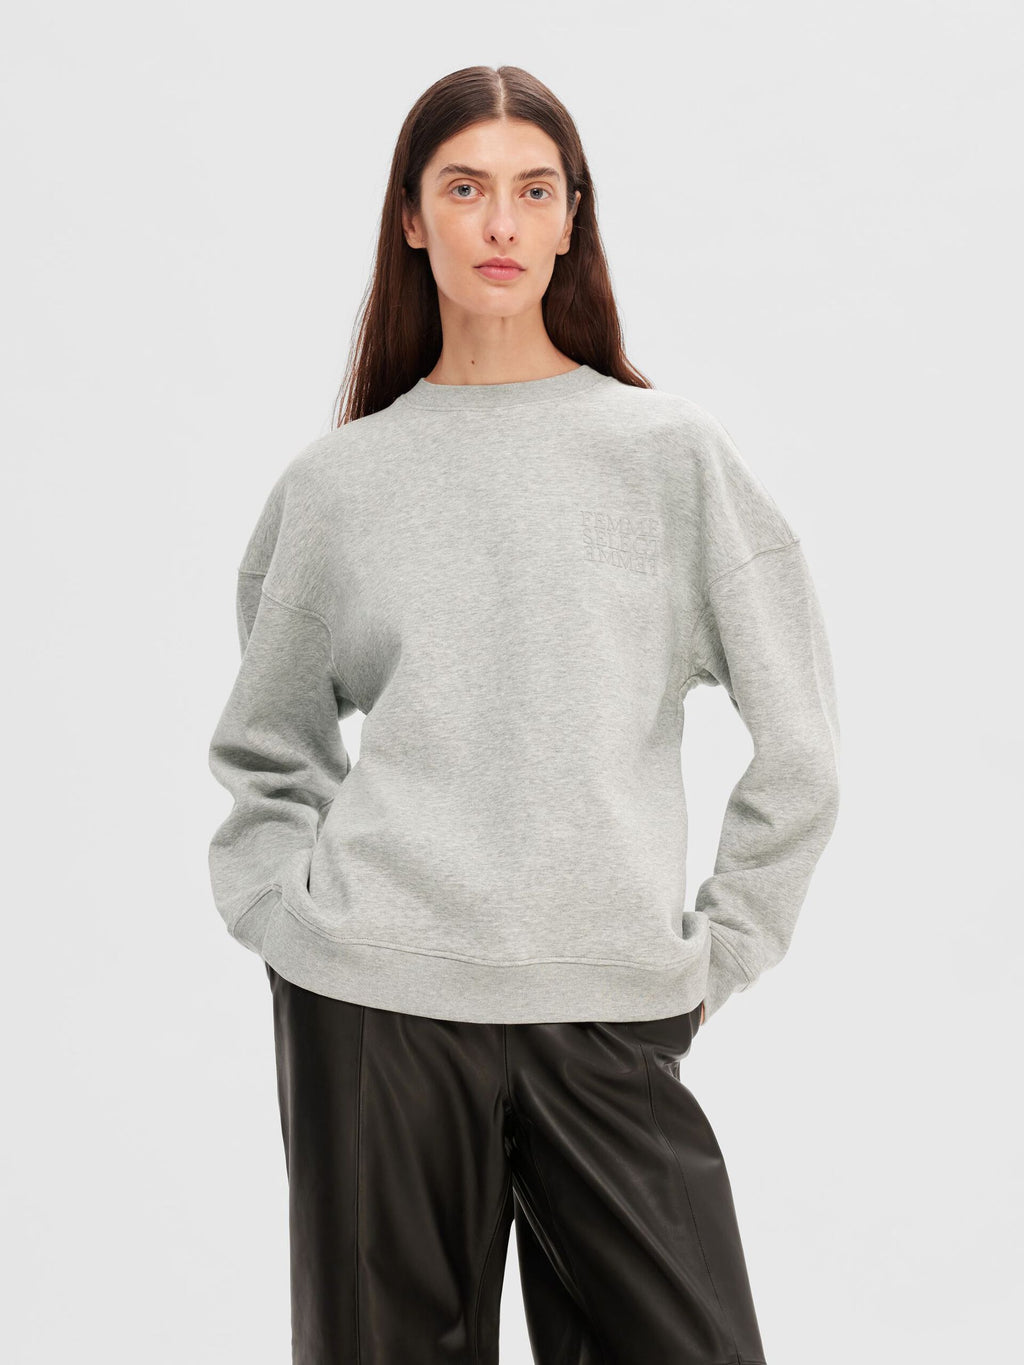 Sweatshirt Mala-Joelle, light grey melange